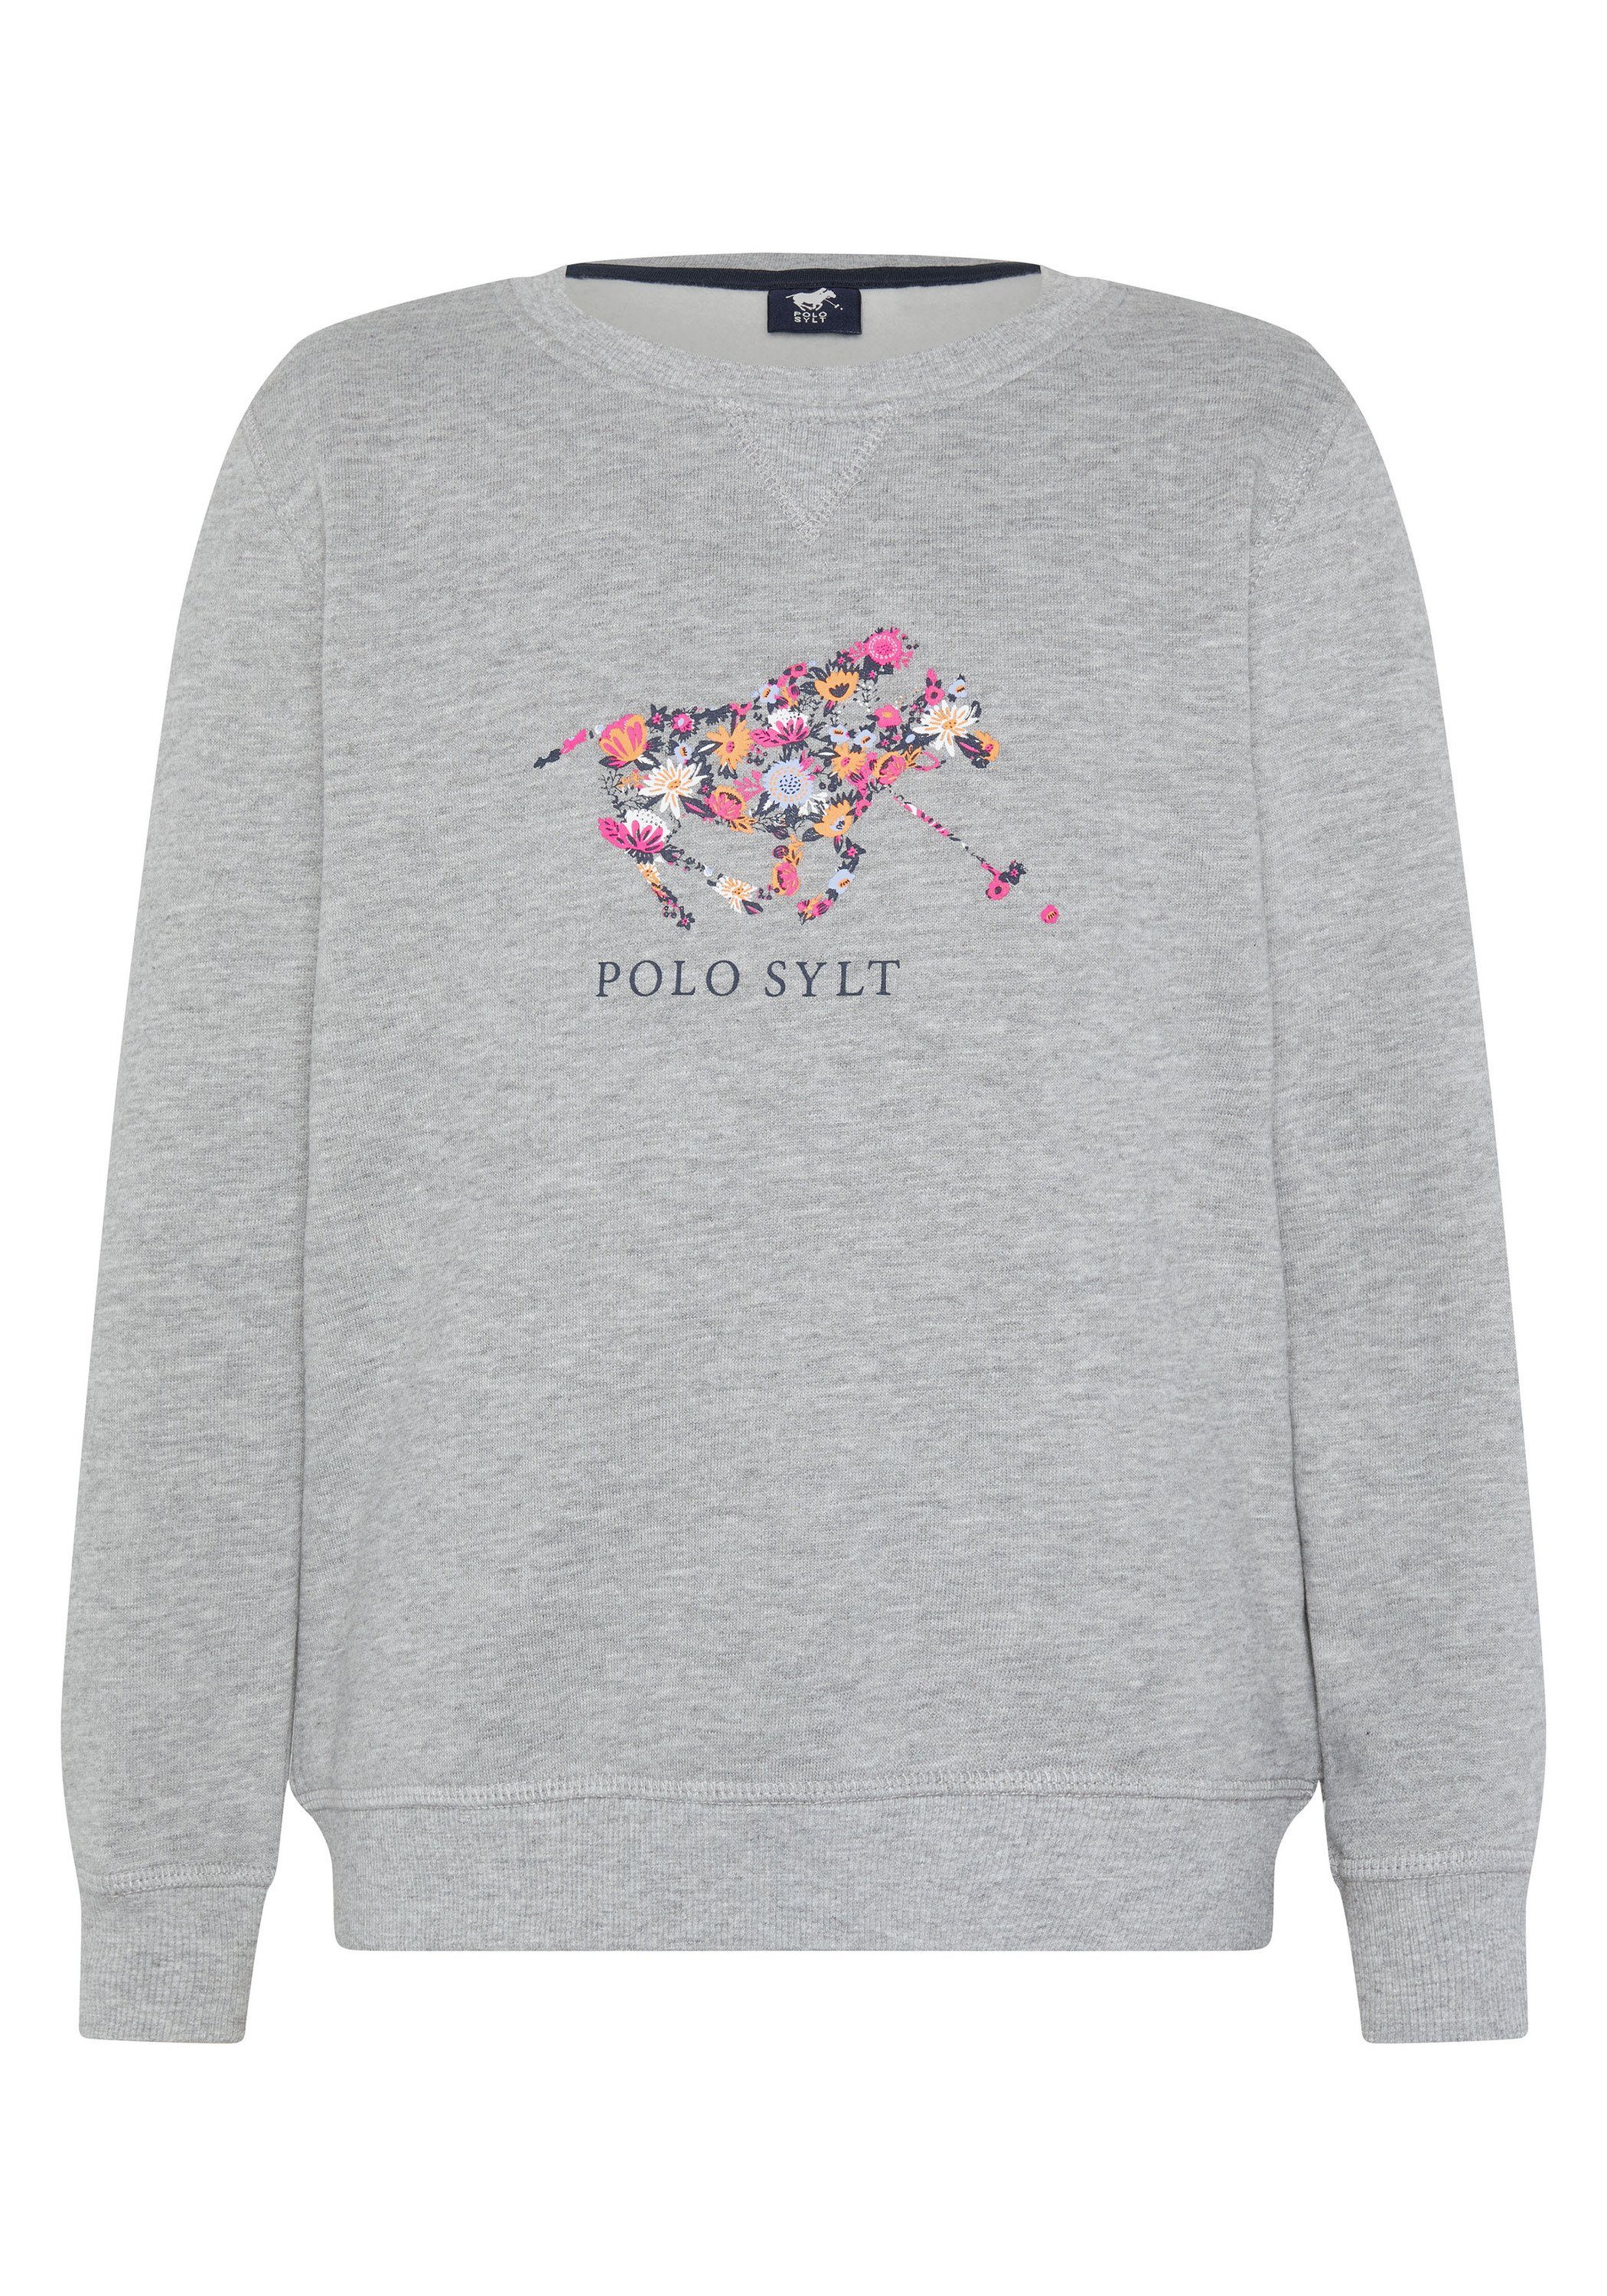 Polo Sylt Sweatshirt mit floralem Logodesign 17-4402M Neutral Gray Melange